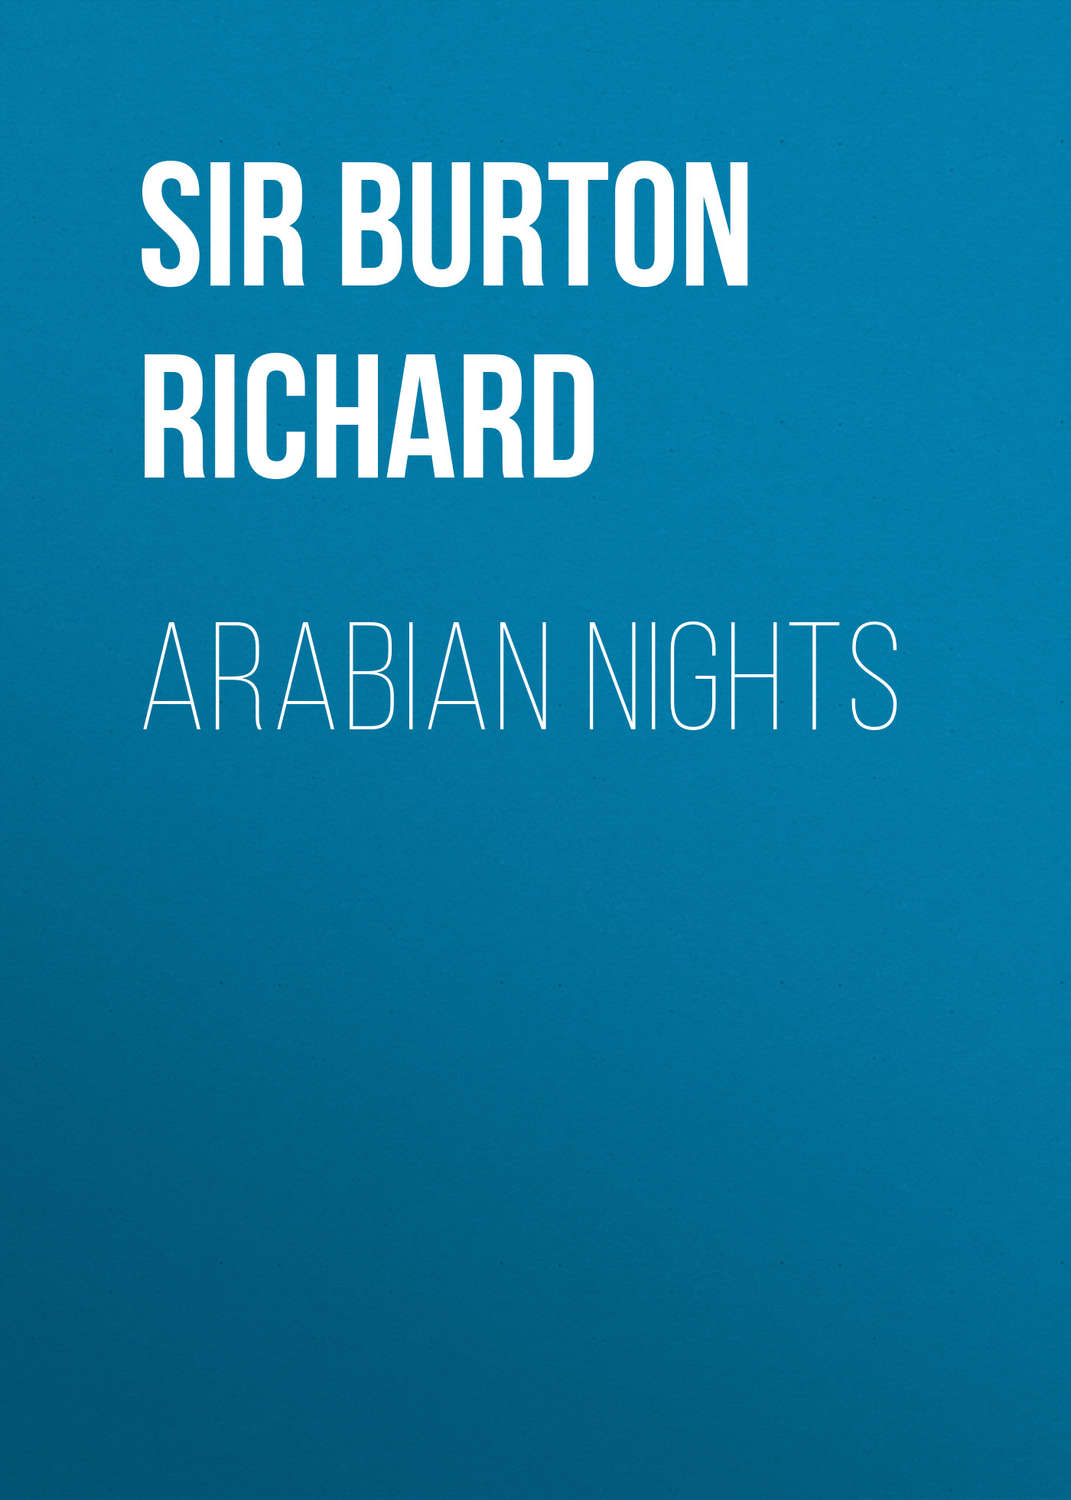 Sir Burton Richard Arabian Nights Download Epub Mobi Pdf At Litres